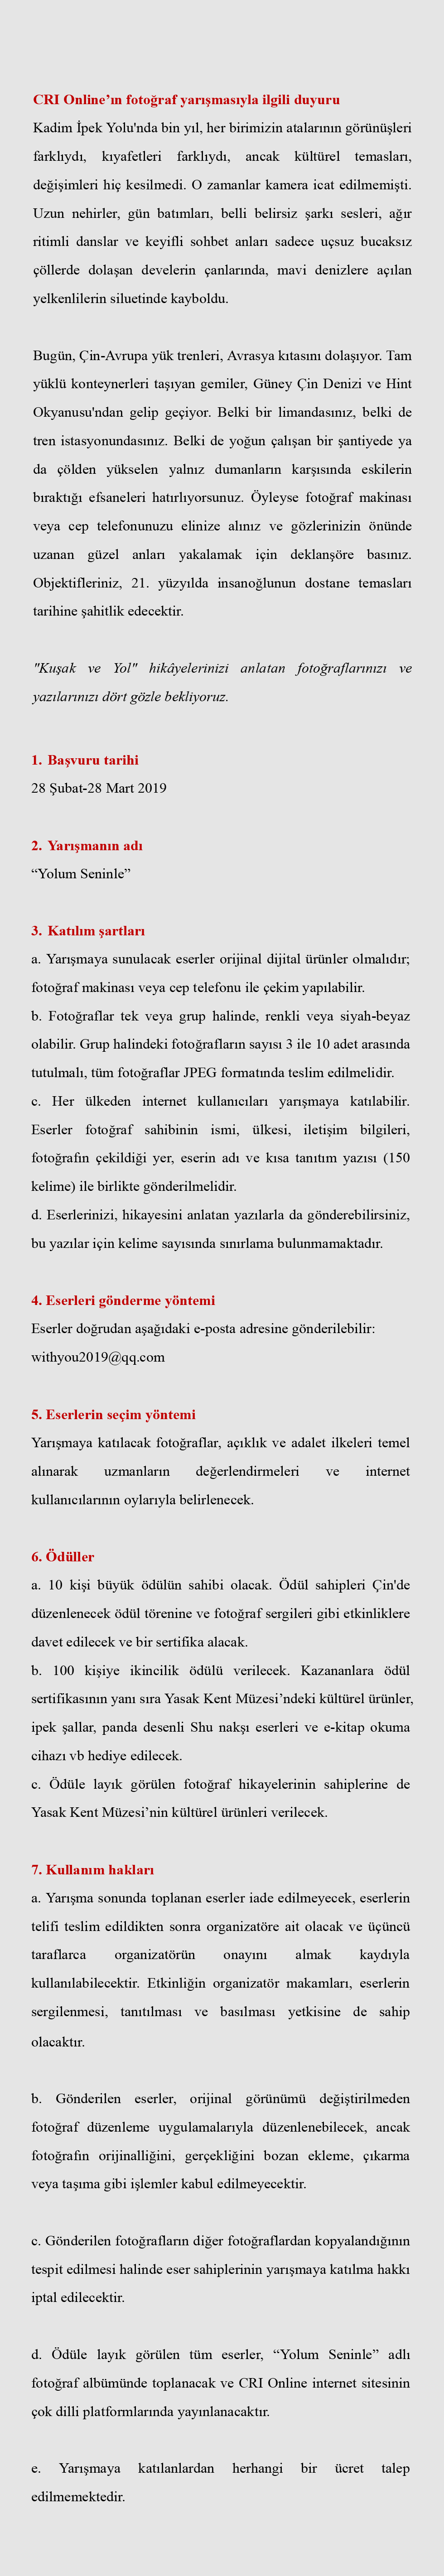 文案圖_fororder_Text-土耳其